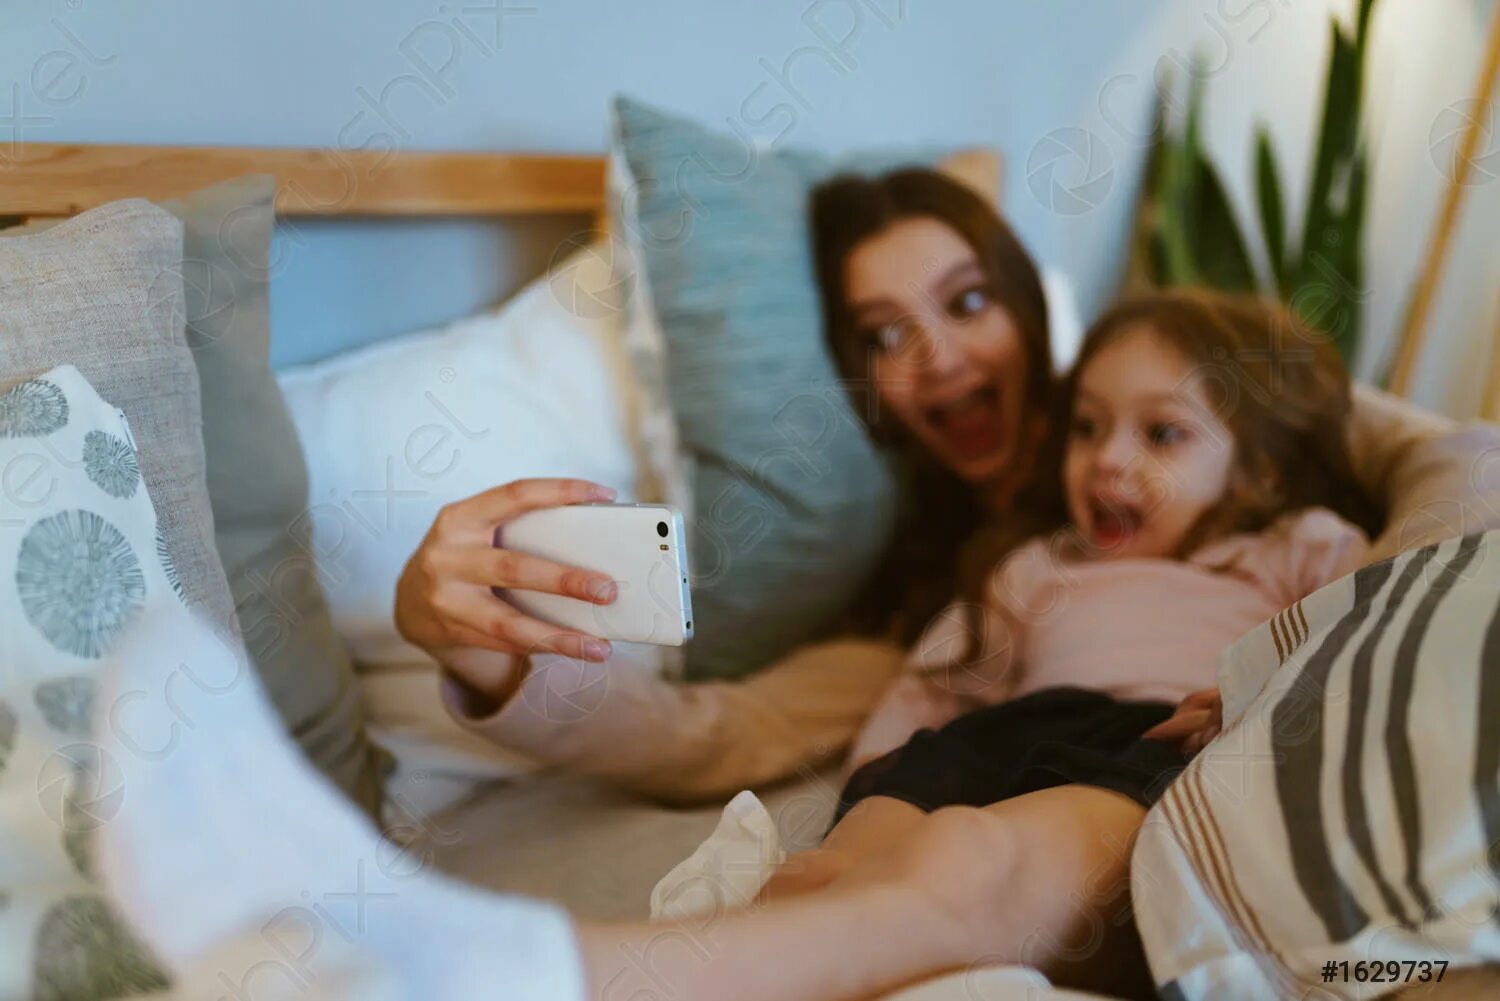 Daughter panties. Мама и дочь лежат на кровати. Мама и дочка лежат в постели. Мама с дочкой на кровати селфи. Фото мама с дочкой в постели.